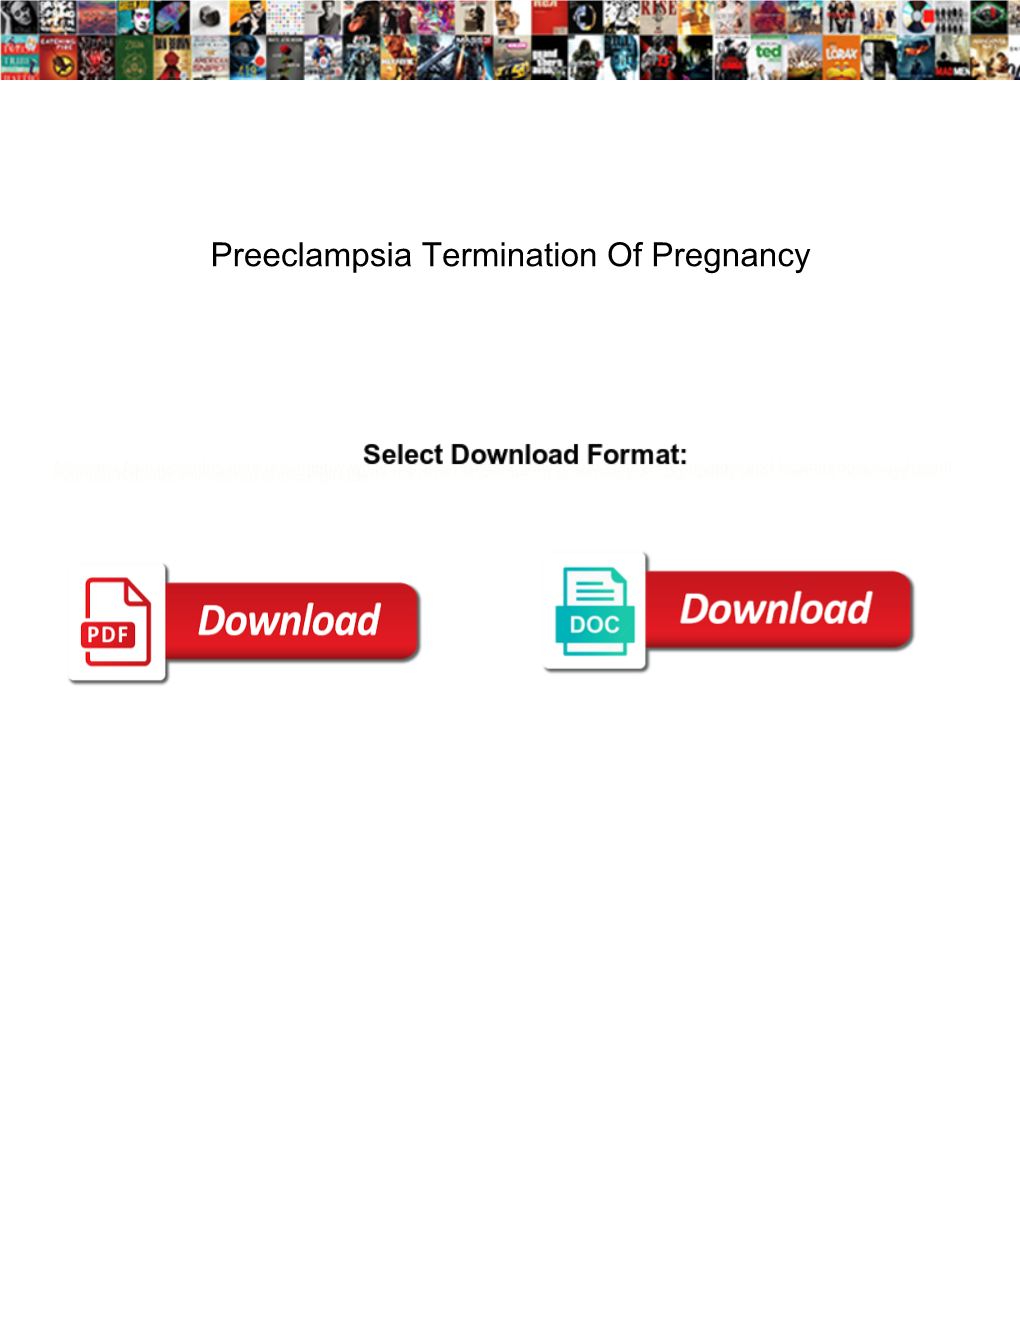 Preeclampsia Termination of Pregnancy